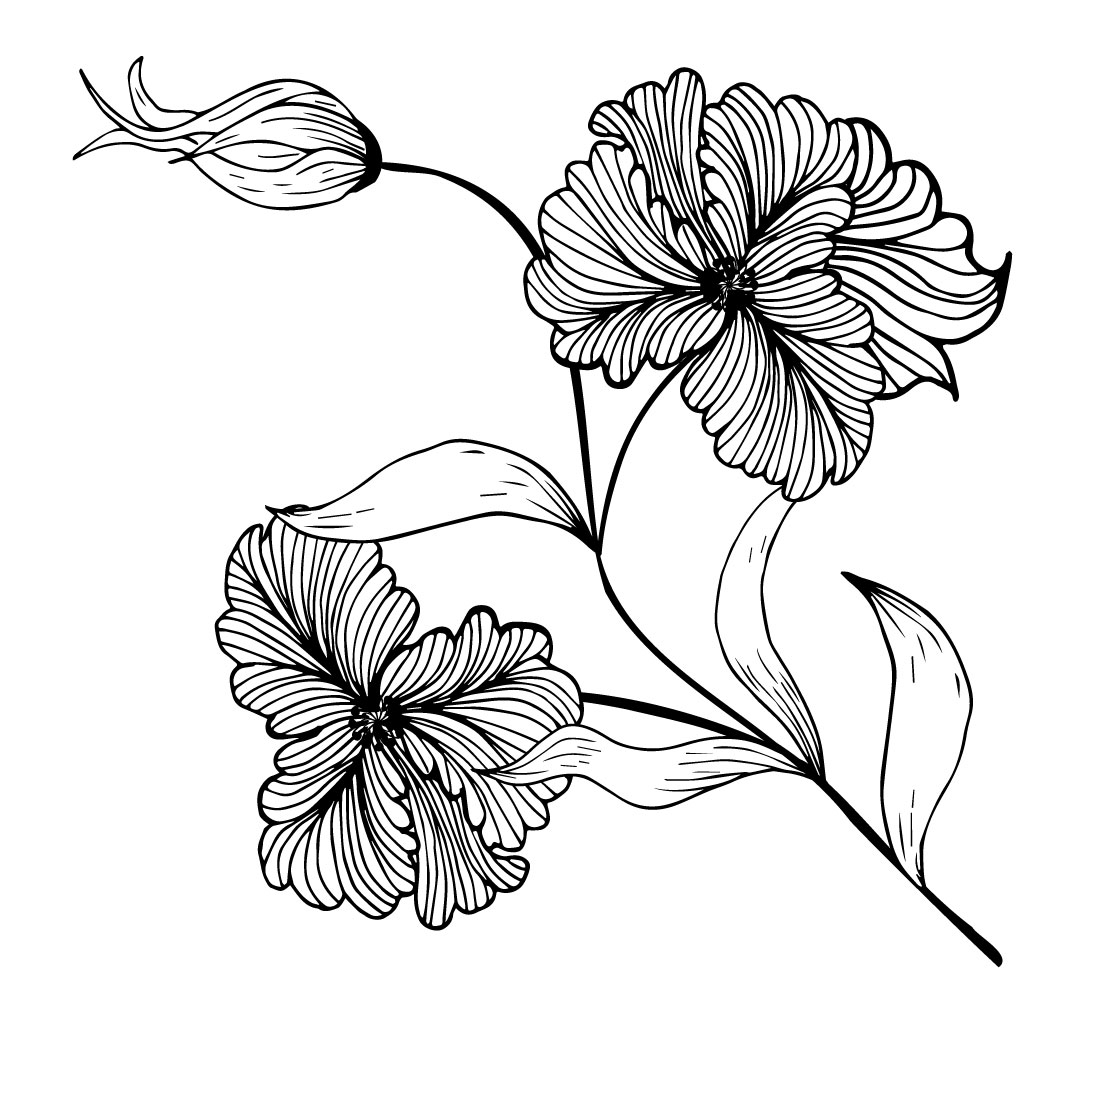 Gentle Floral Composition Design preview image.